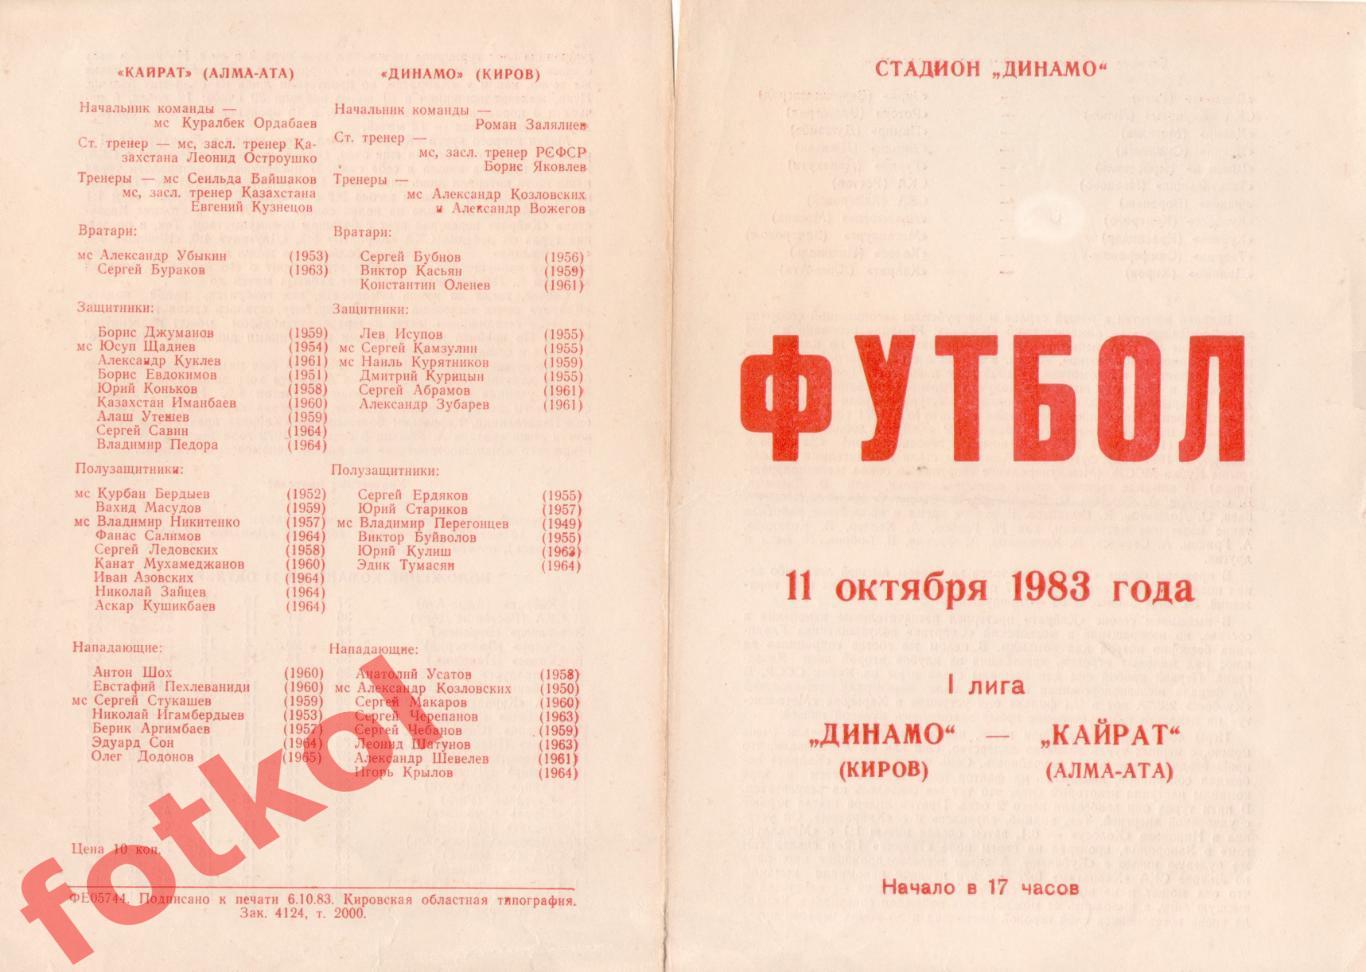 ДИНАМО Киров - КАЙРАТ Алма - Ата 11.10.1983